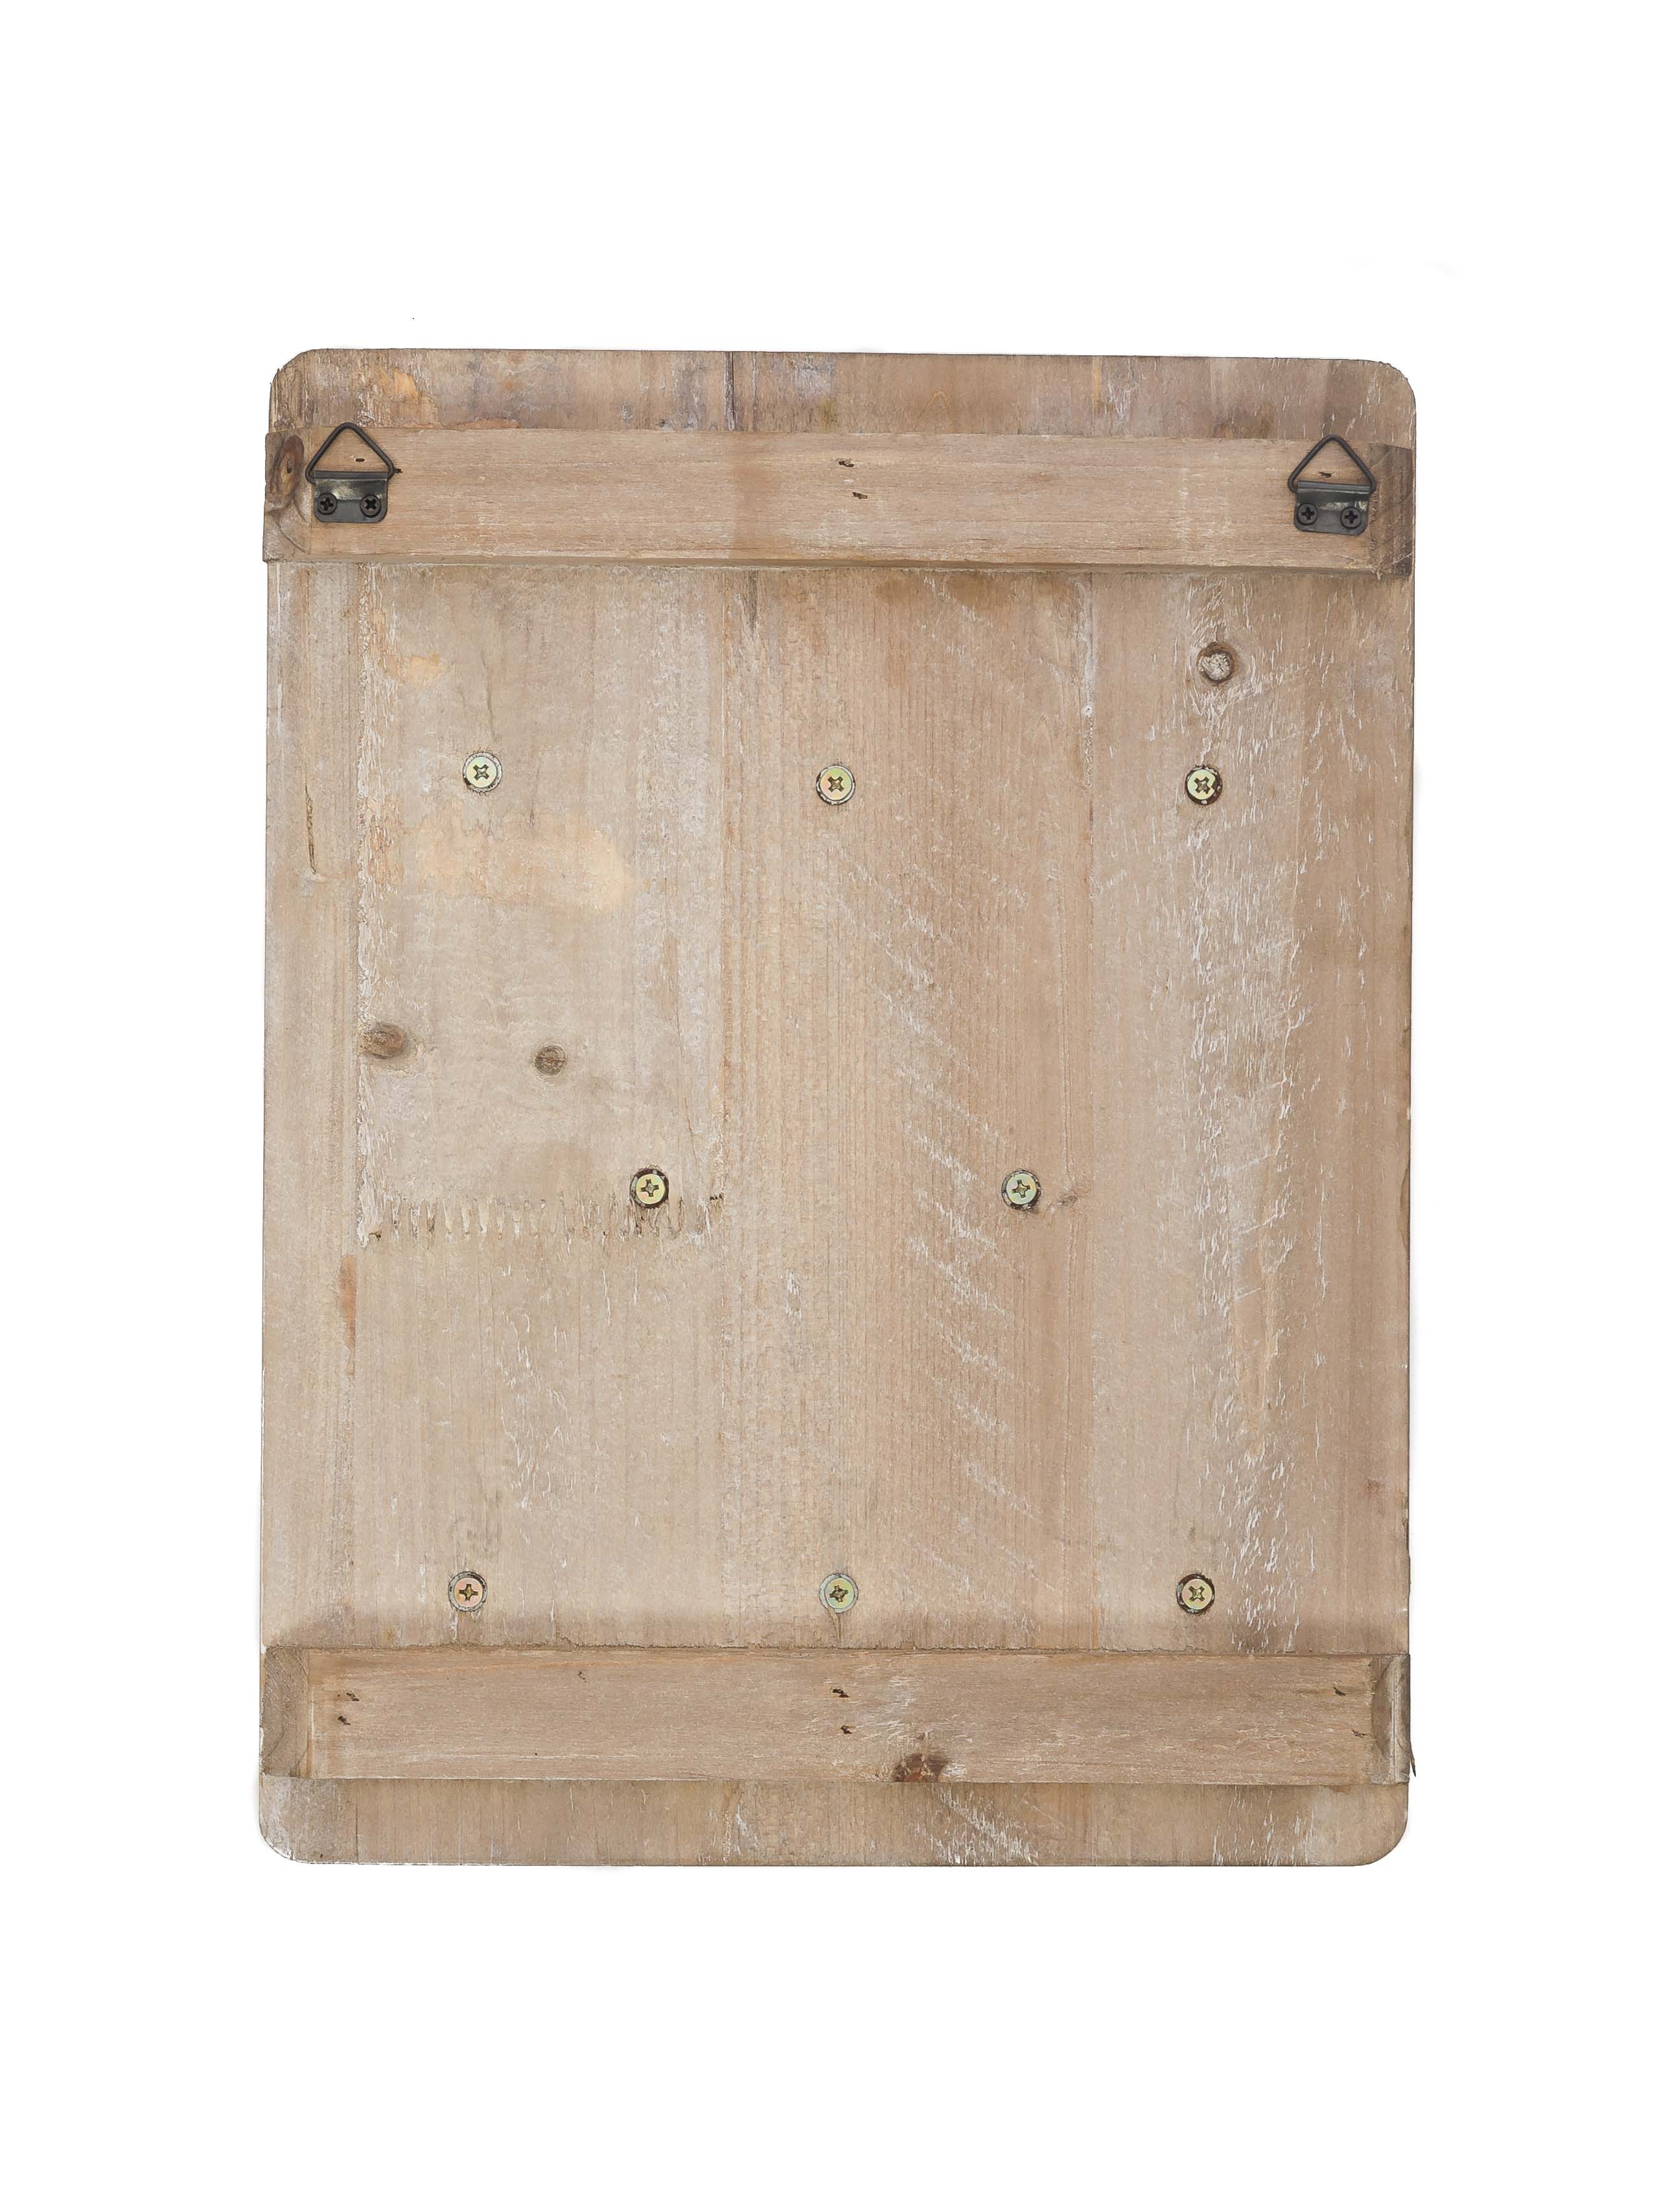 aubaho Key box in antique style key keyholder landhaus shabby chic wooden 